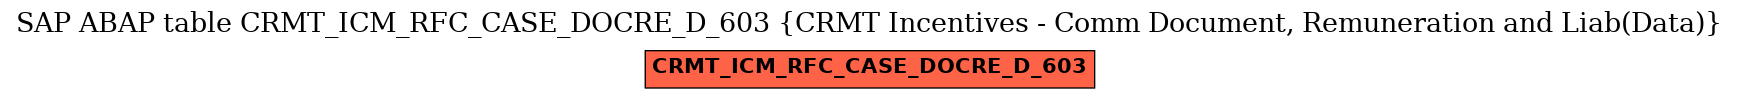 E-R Diagram for table CRMT_ICM_RFC_CASE_DOCRE_D_603 (CRMT Incentives - Comm Document, Remuneration and Liab(Data))